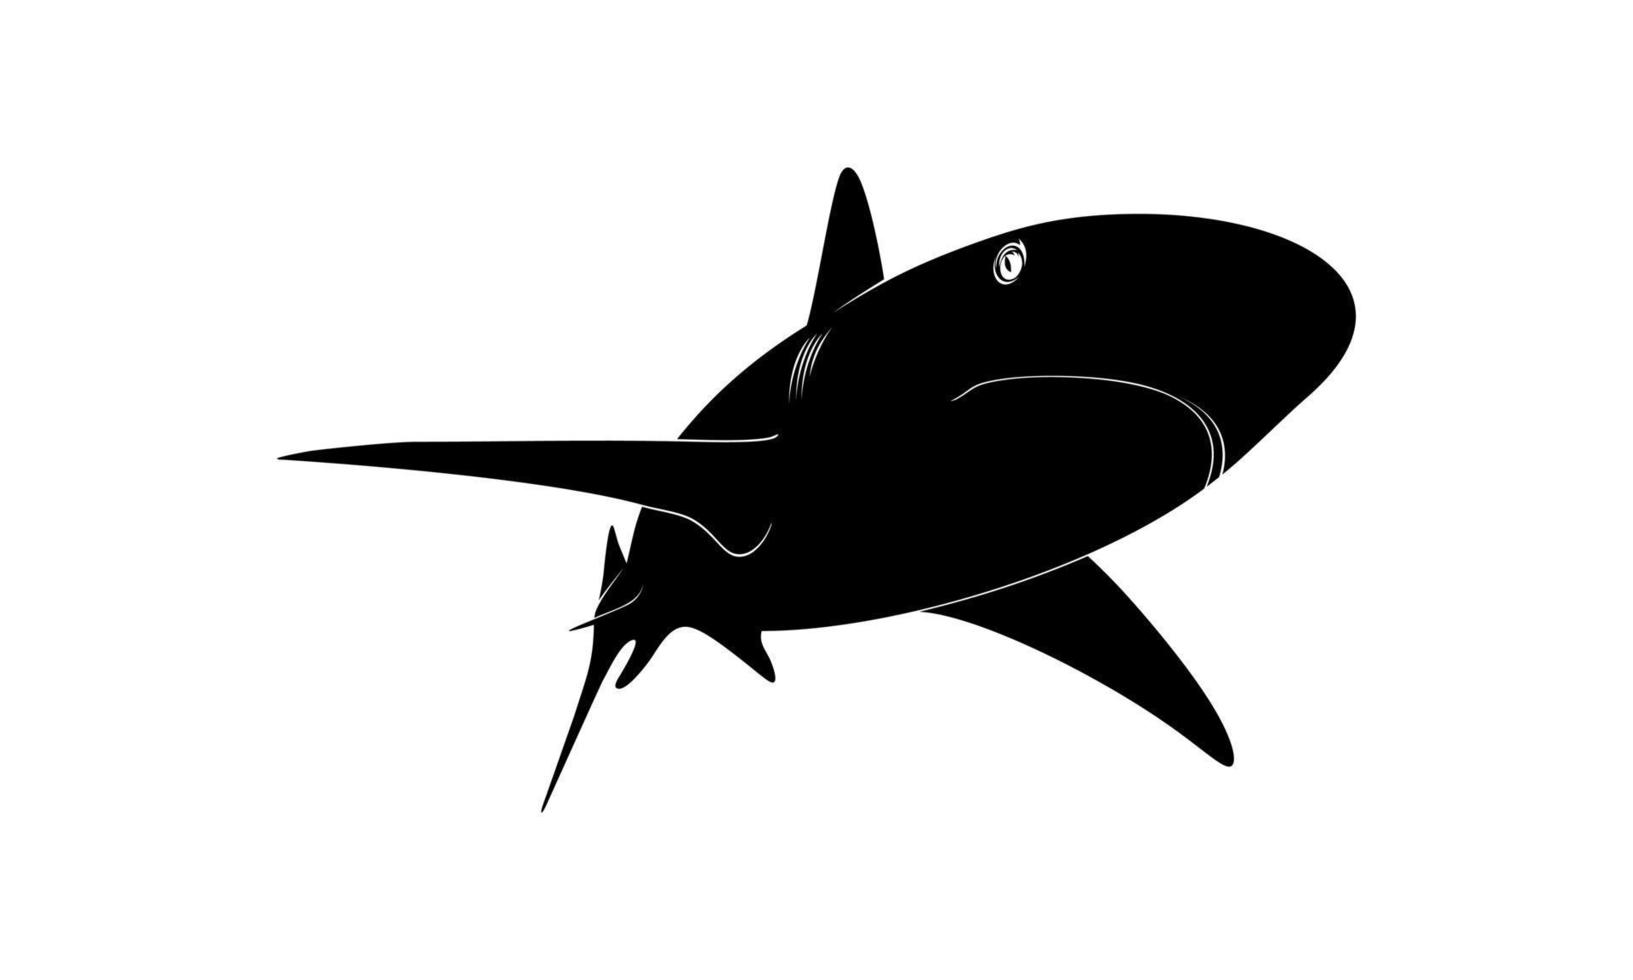 silueta de tiburón para logotipo, pictograma, sitio web, ilustración de arte, infografía o elemento de diseño gráfico. ilustración vectorial vector